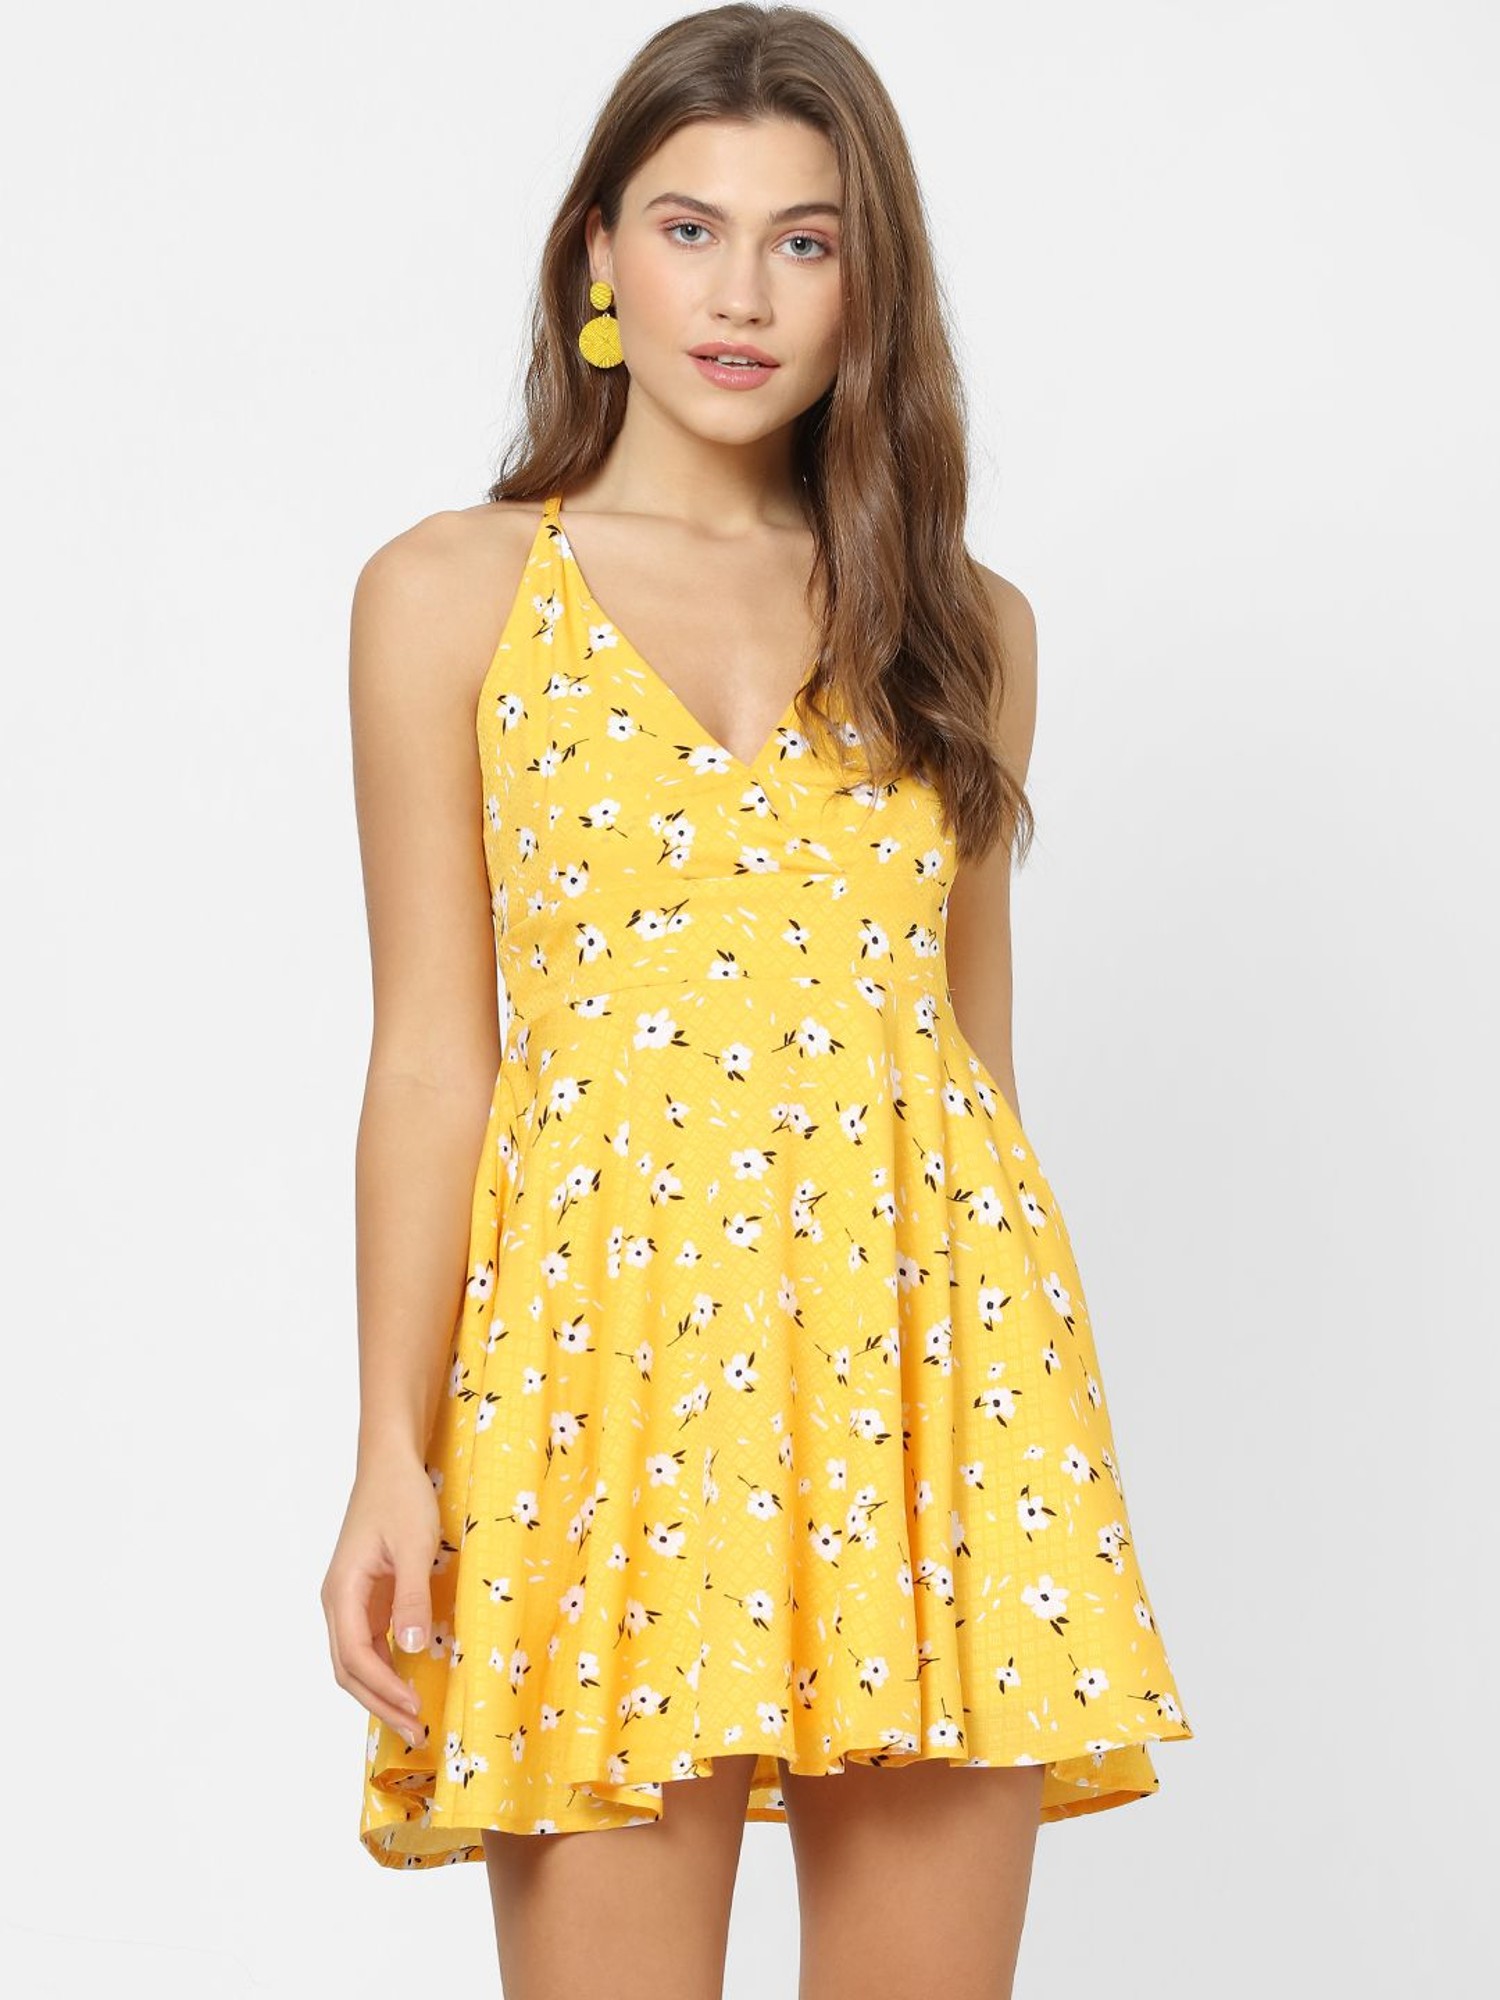 Forever 21 Yellow Dress Women's Small D10 | eBay